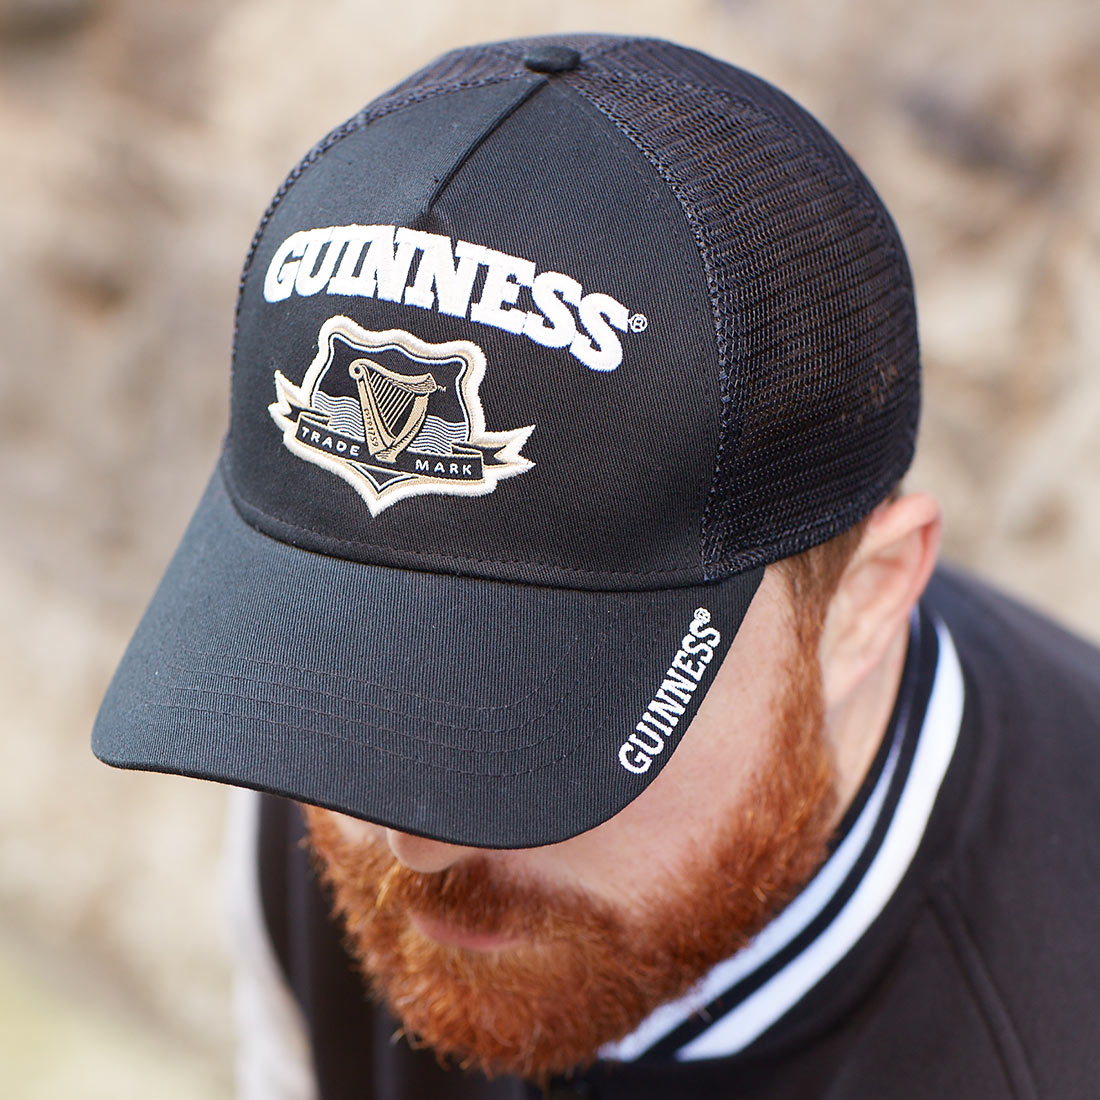 A bearded man sporting a Guinness Signature Black Trucker Mesh Baseball Cap Adjustable trucker hat.